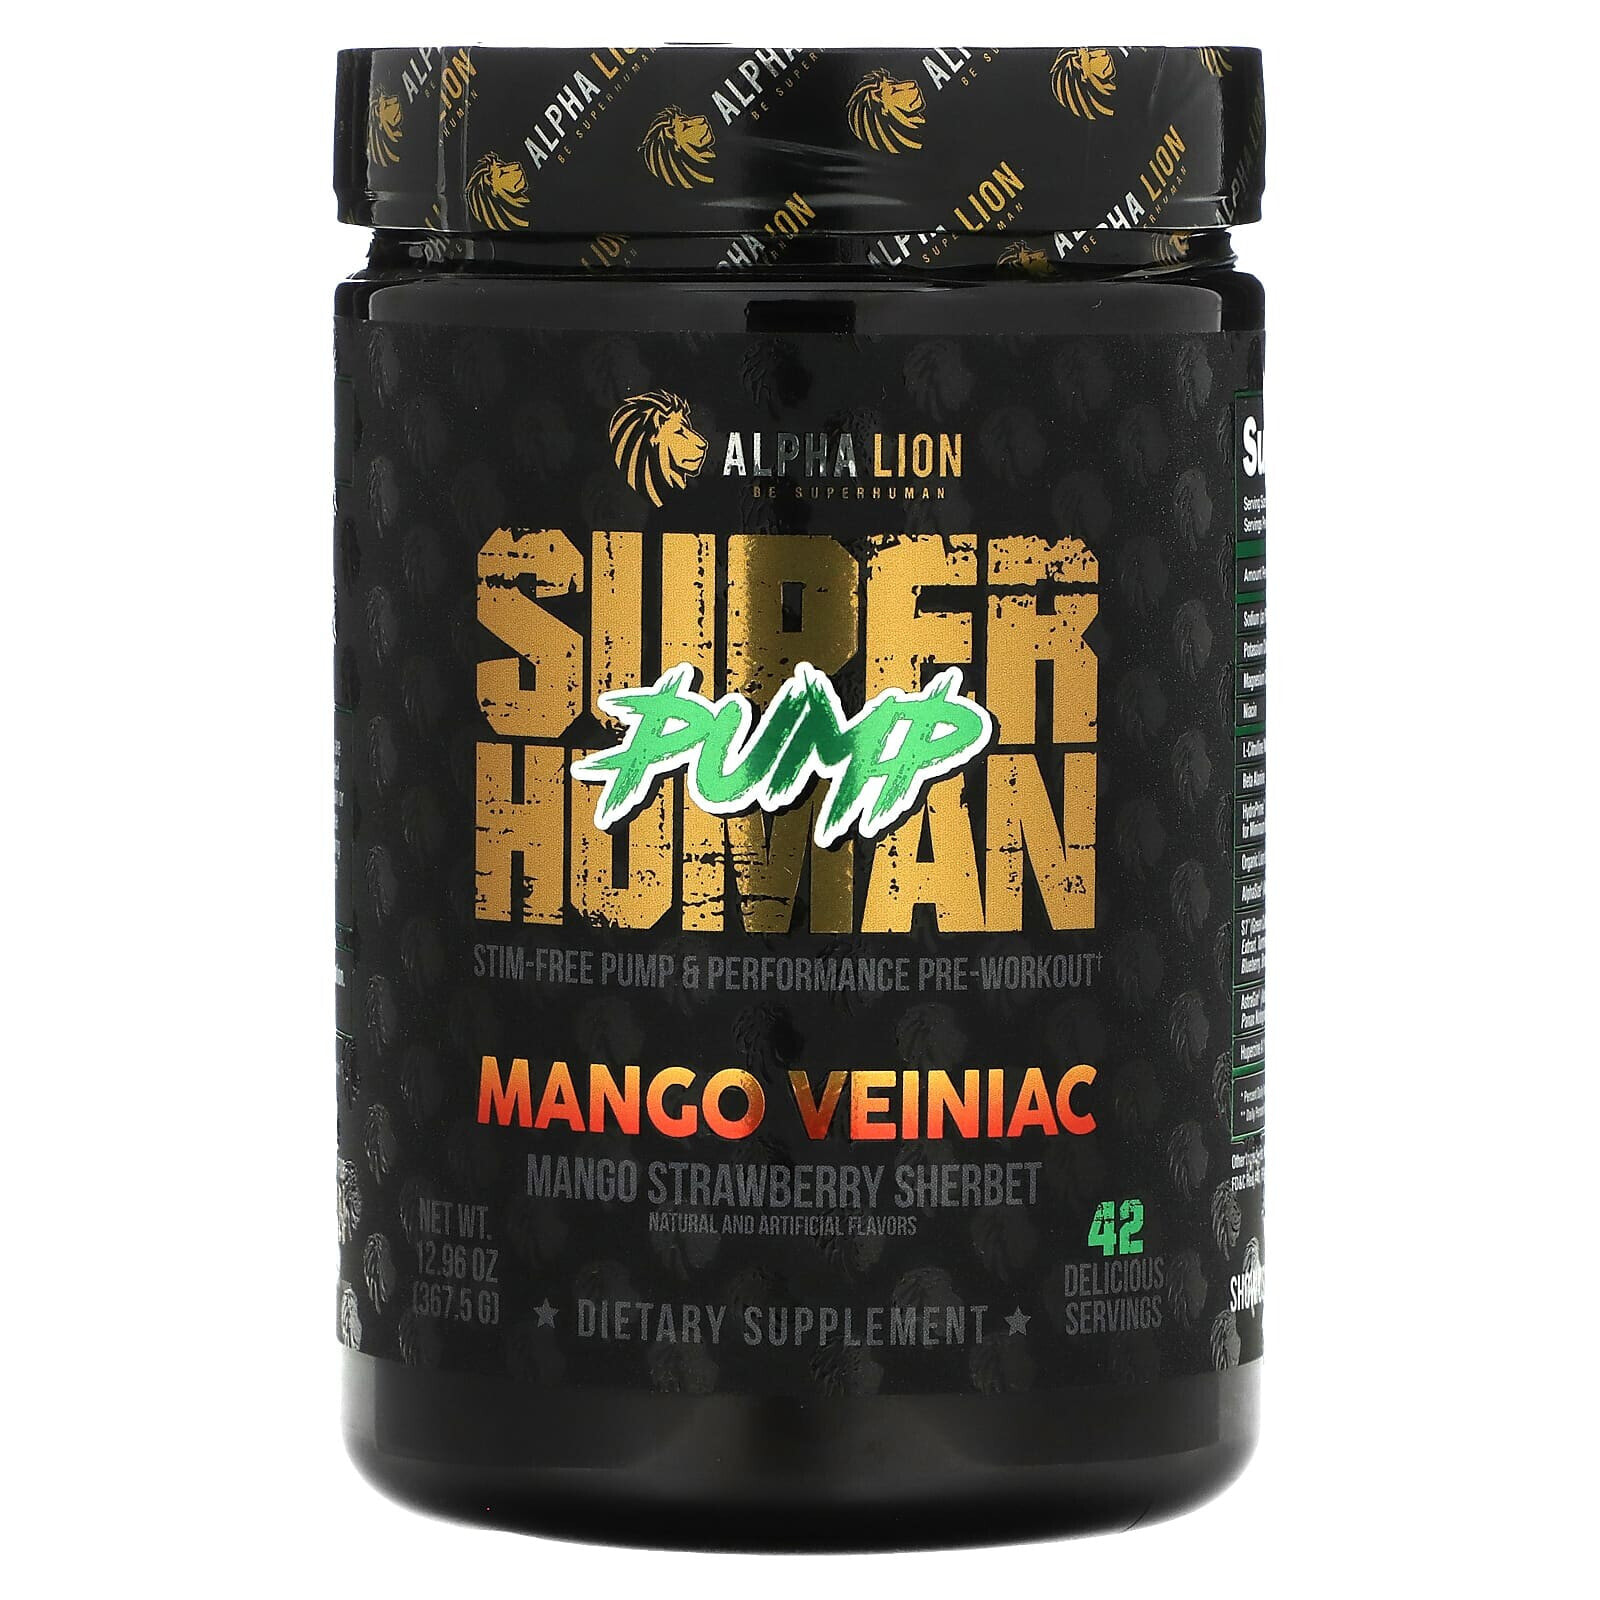 SuperHuman Pump, Mango Veiniac, Mango Strawberry Sherbet , 12.96 oz (367.5 g)